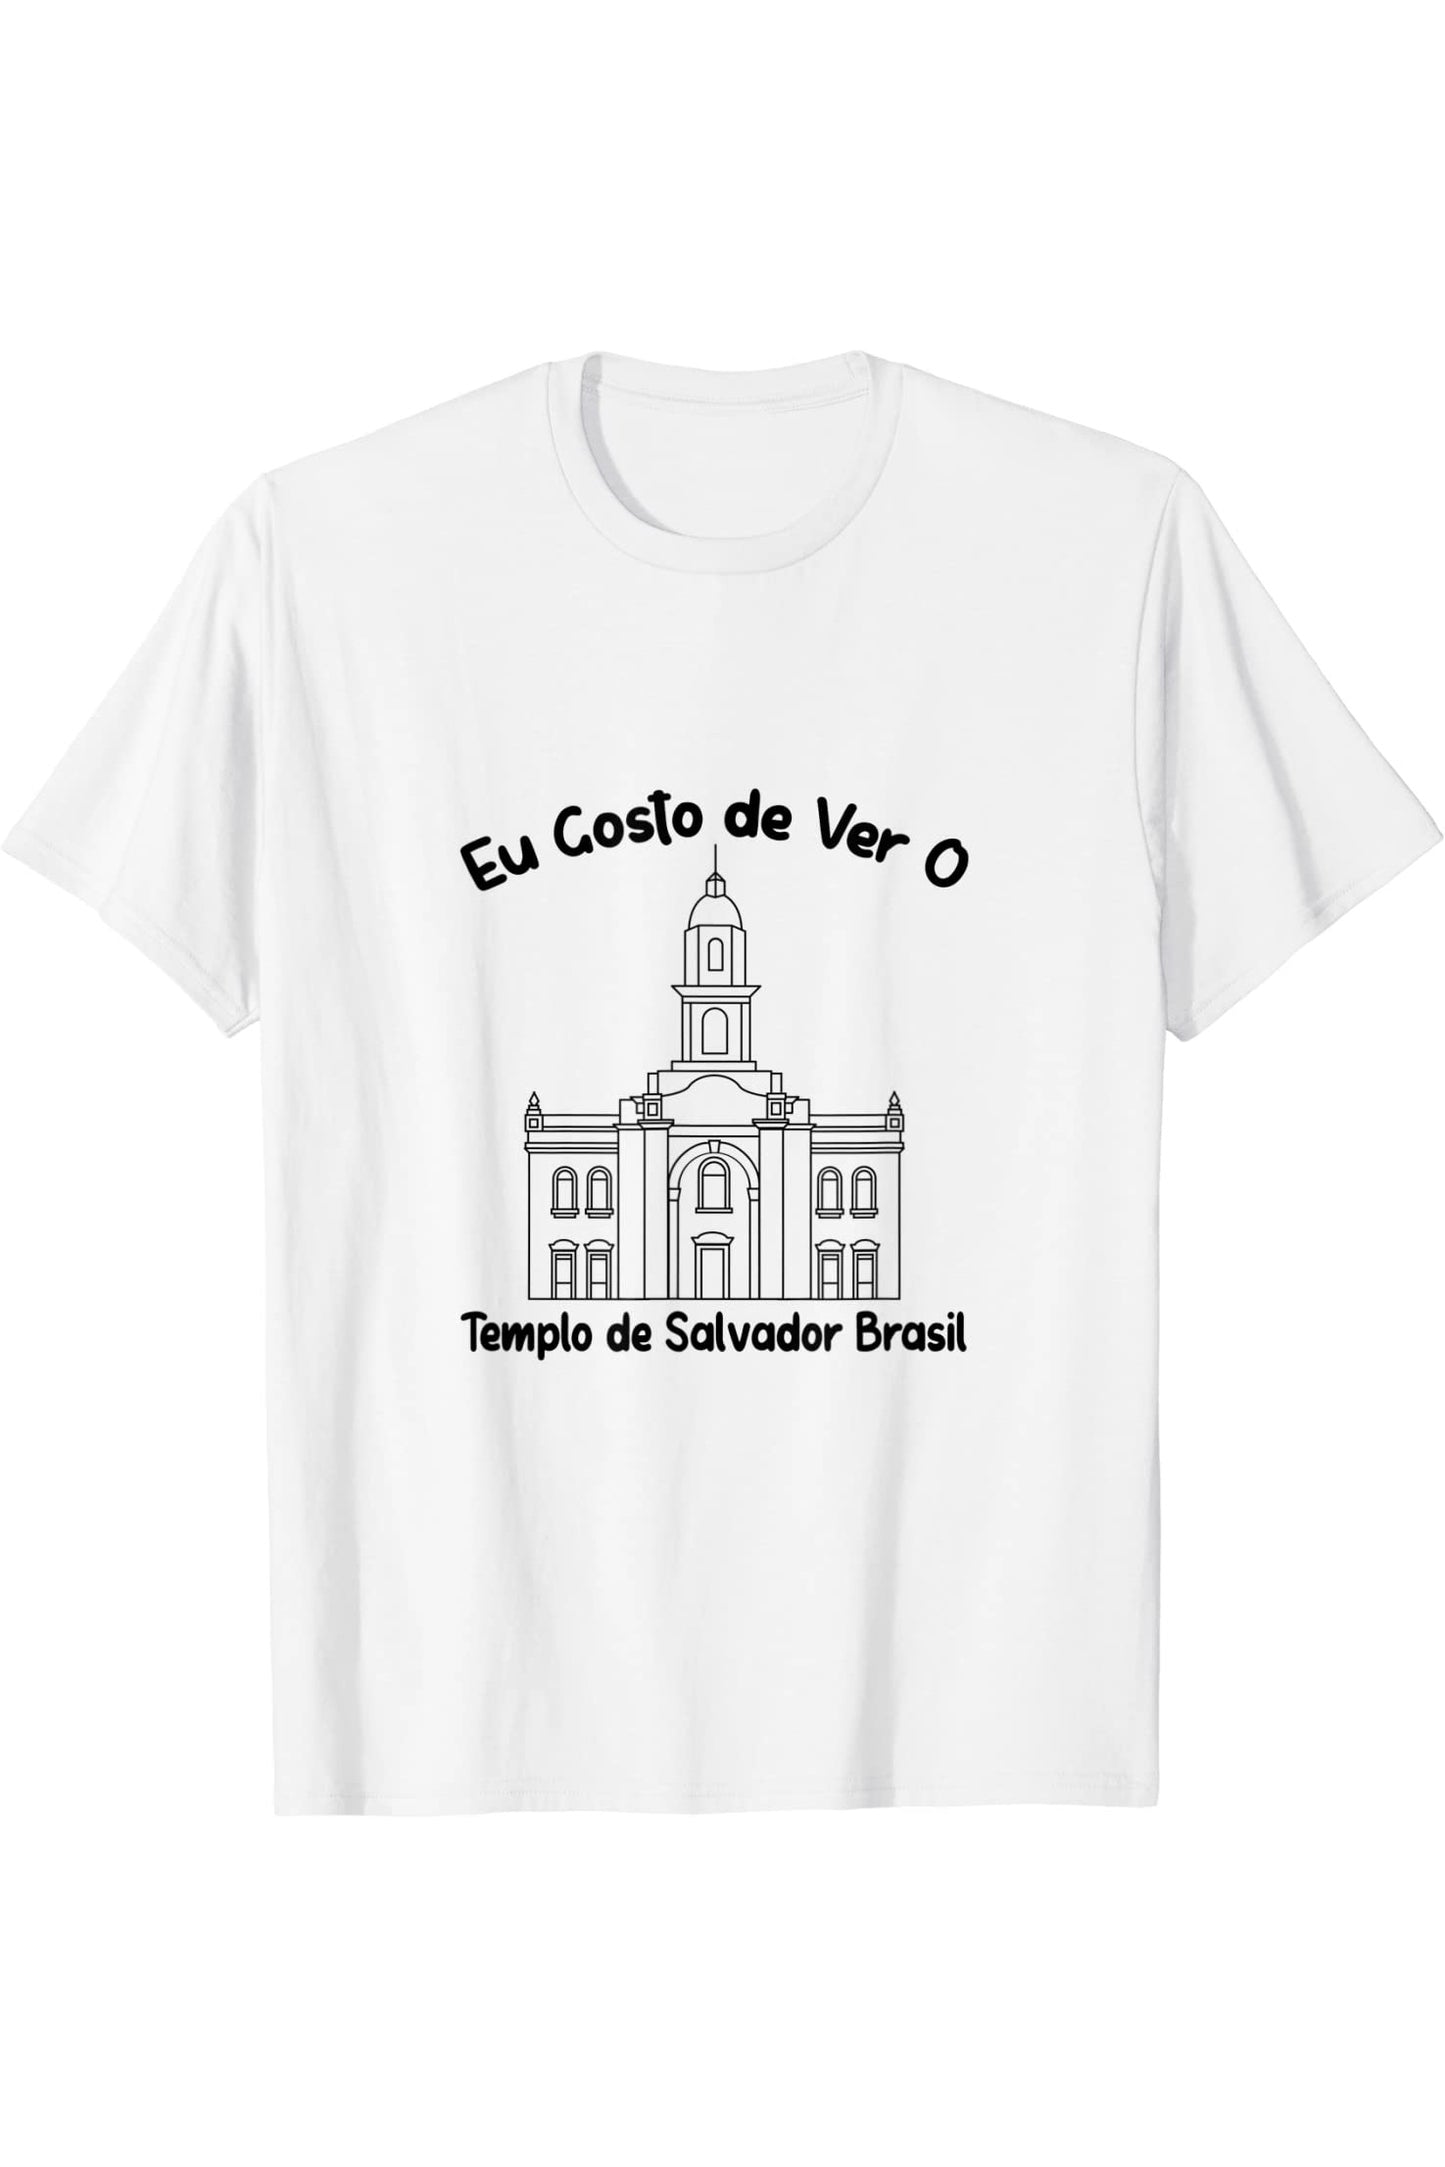 Salvador Brazil Temple T-Shirt - Primary Style (Portuguese) US